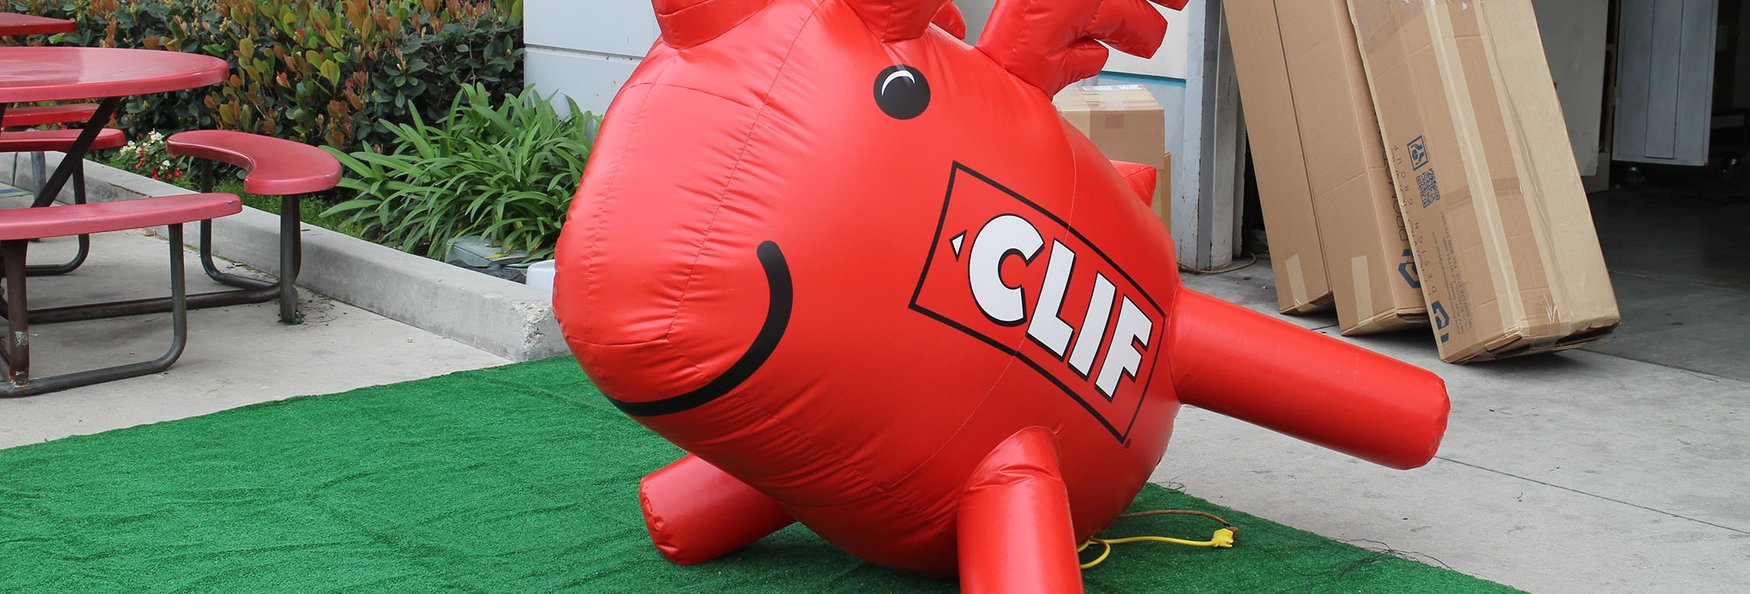 clif-bar-mascot-inflatable 